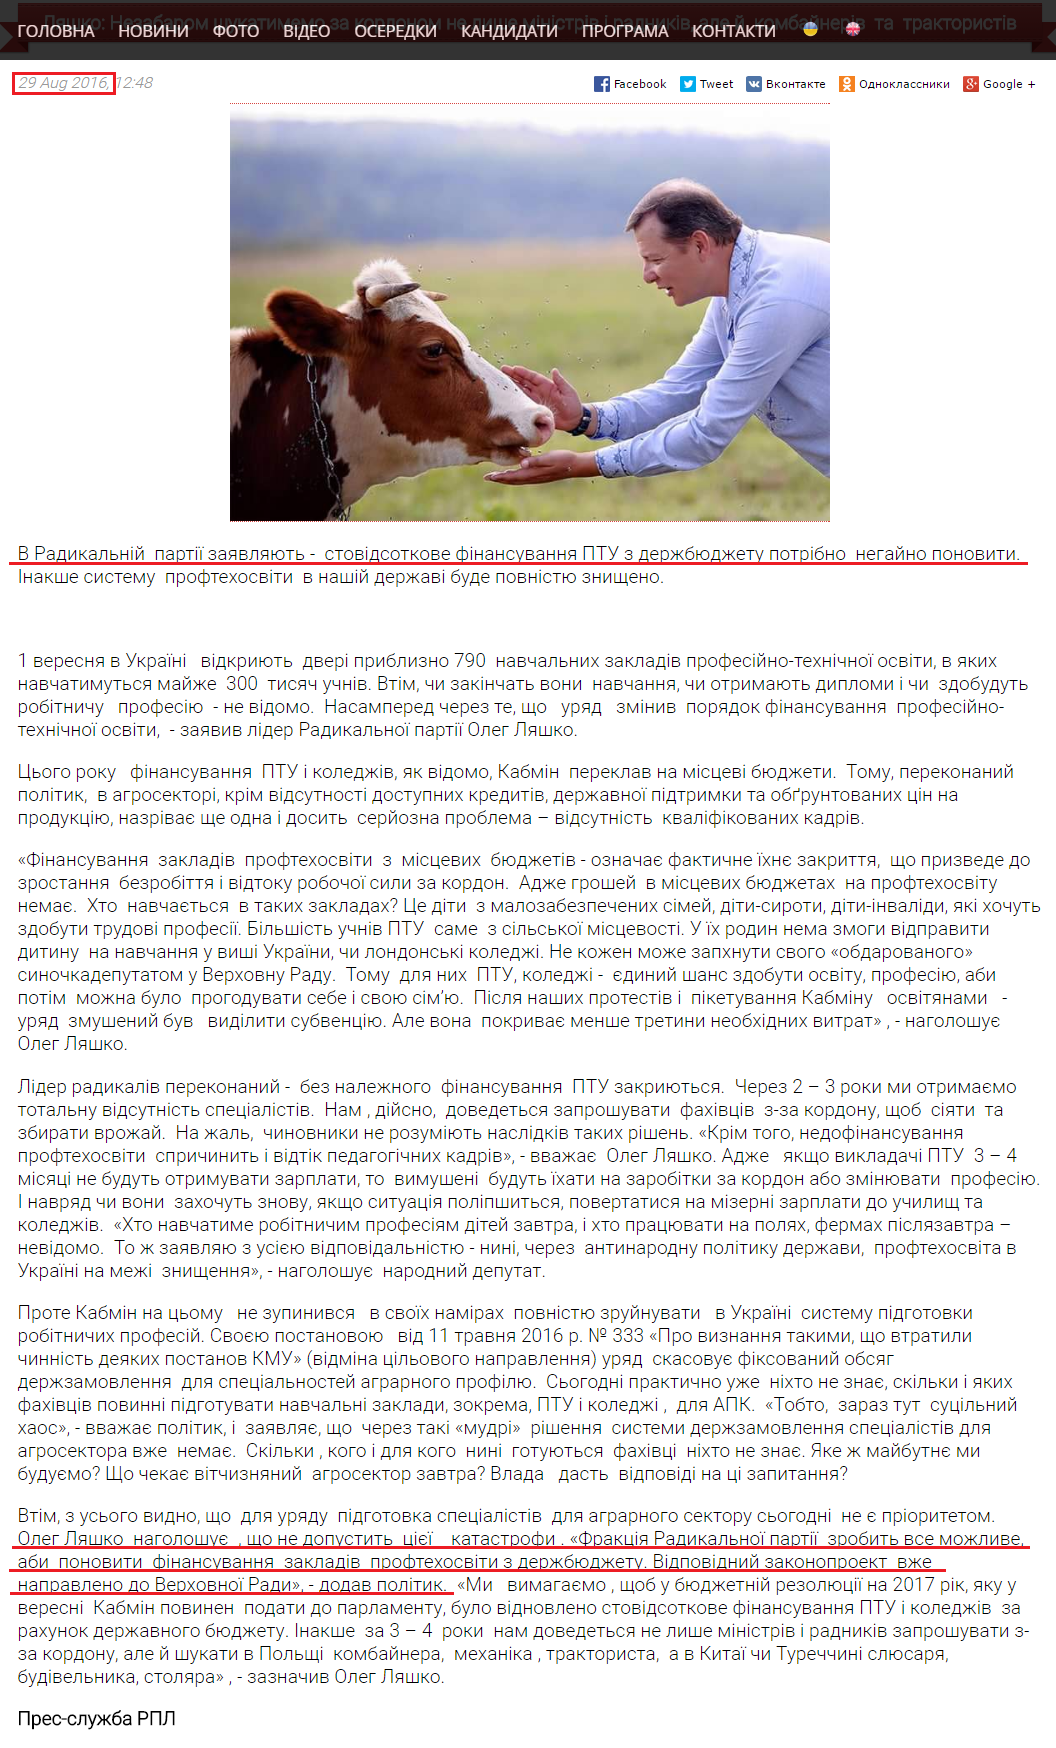 http://www.liashko.ua/news/general/2323-lyashko-nezabarom-shukatimemo-za-kordonom-ne-lishe-ministriv-i-radnikiv-ale-j-kombajneriv-ta-traktoristiv